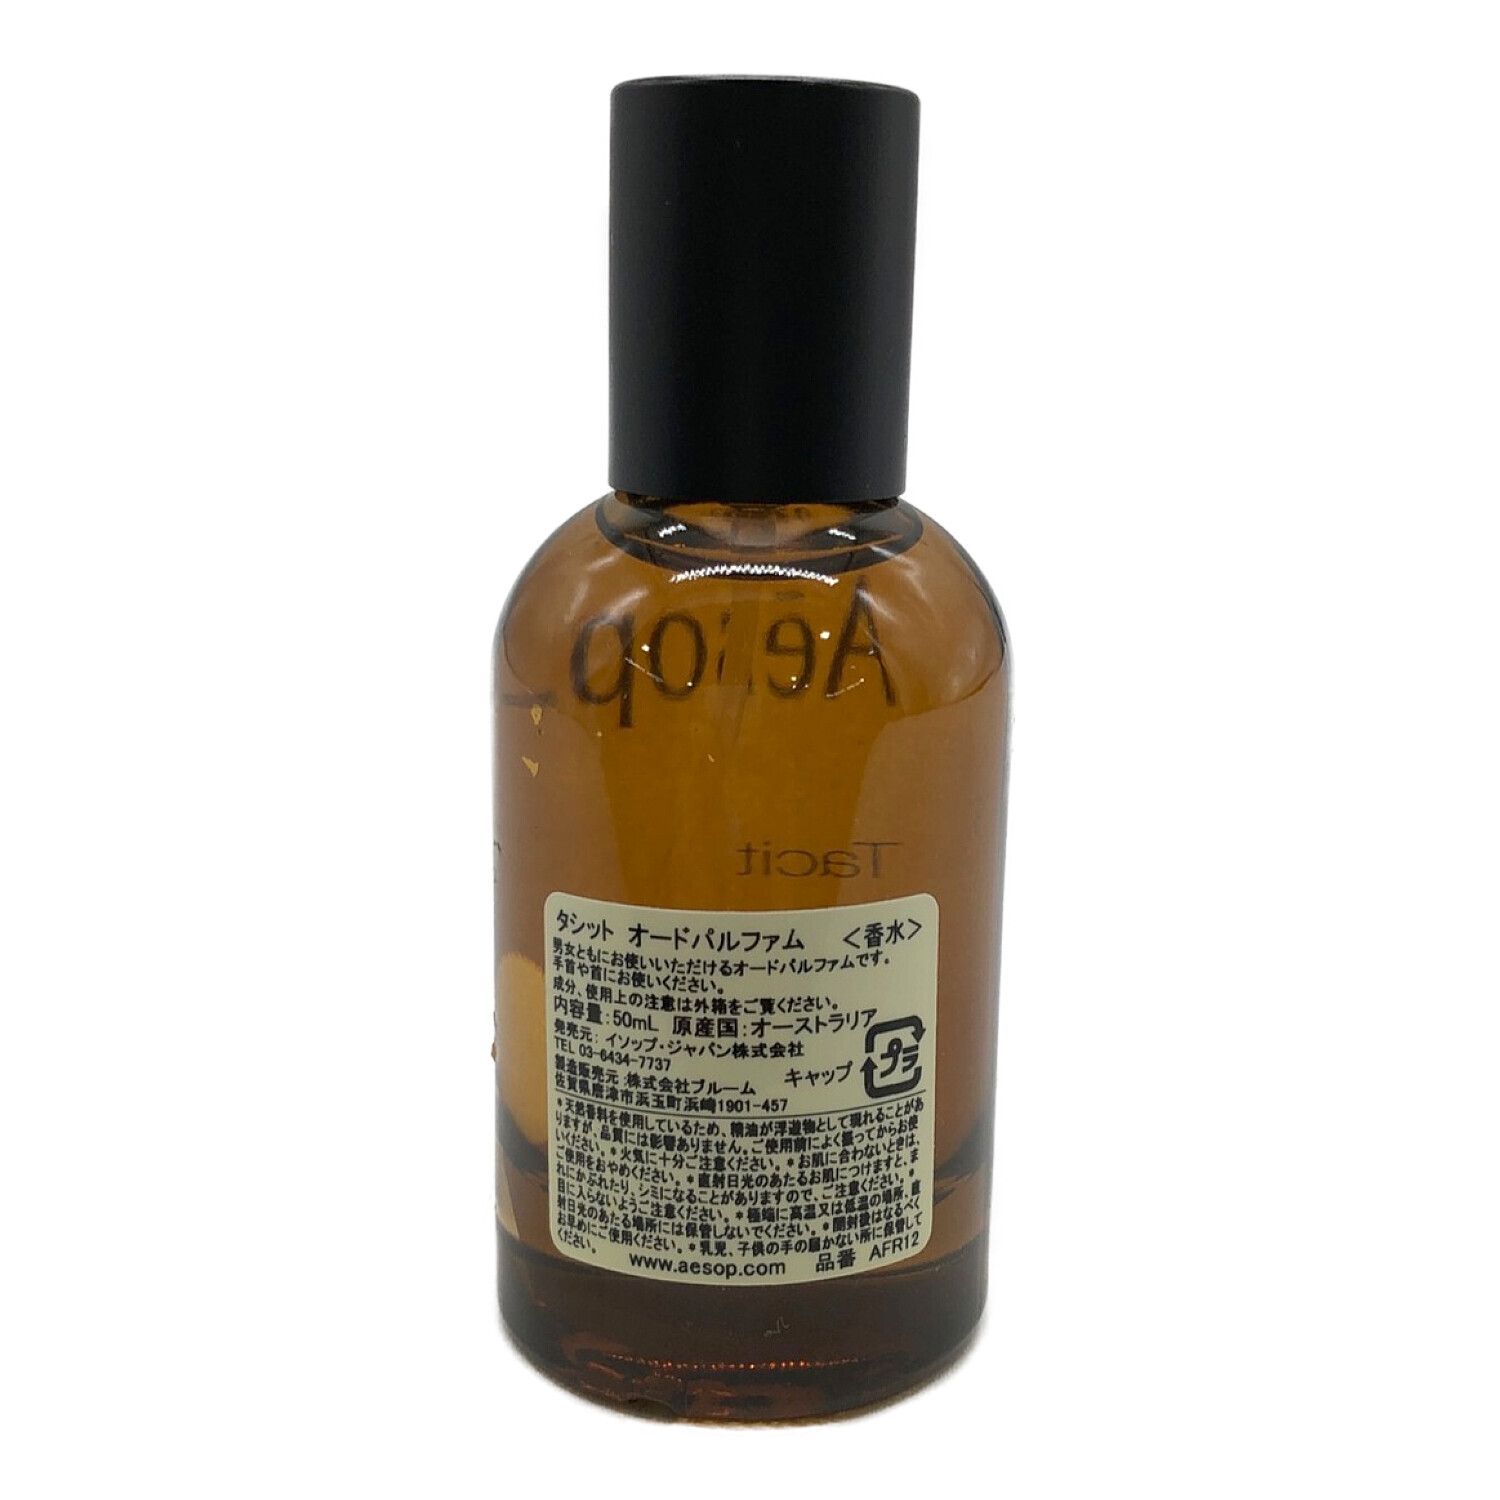 Aesop (イソップ) 香水 50ml タシット オードパルファム 